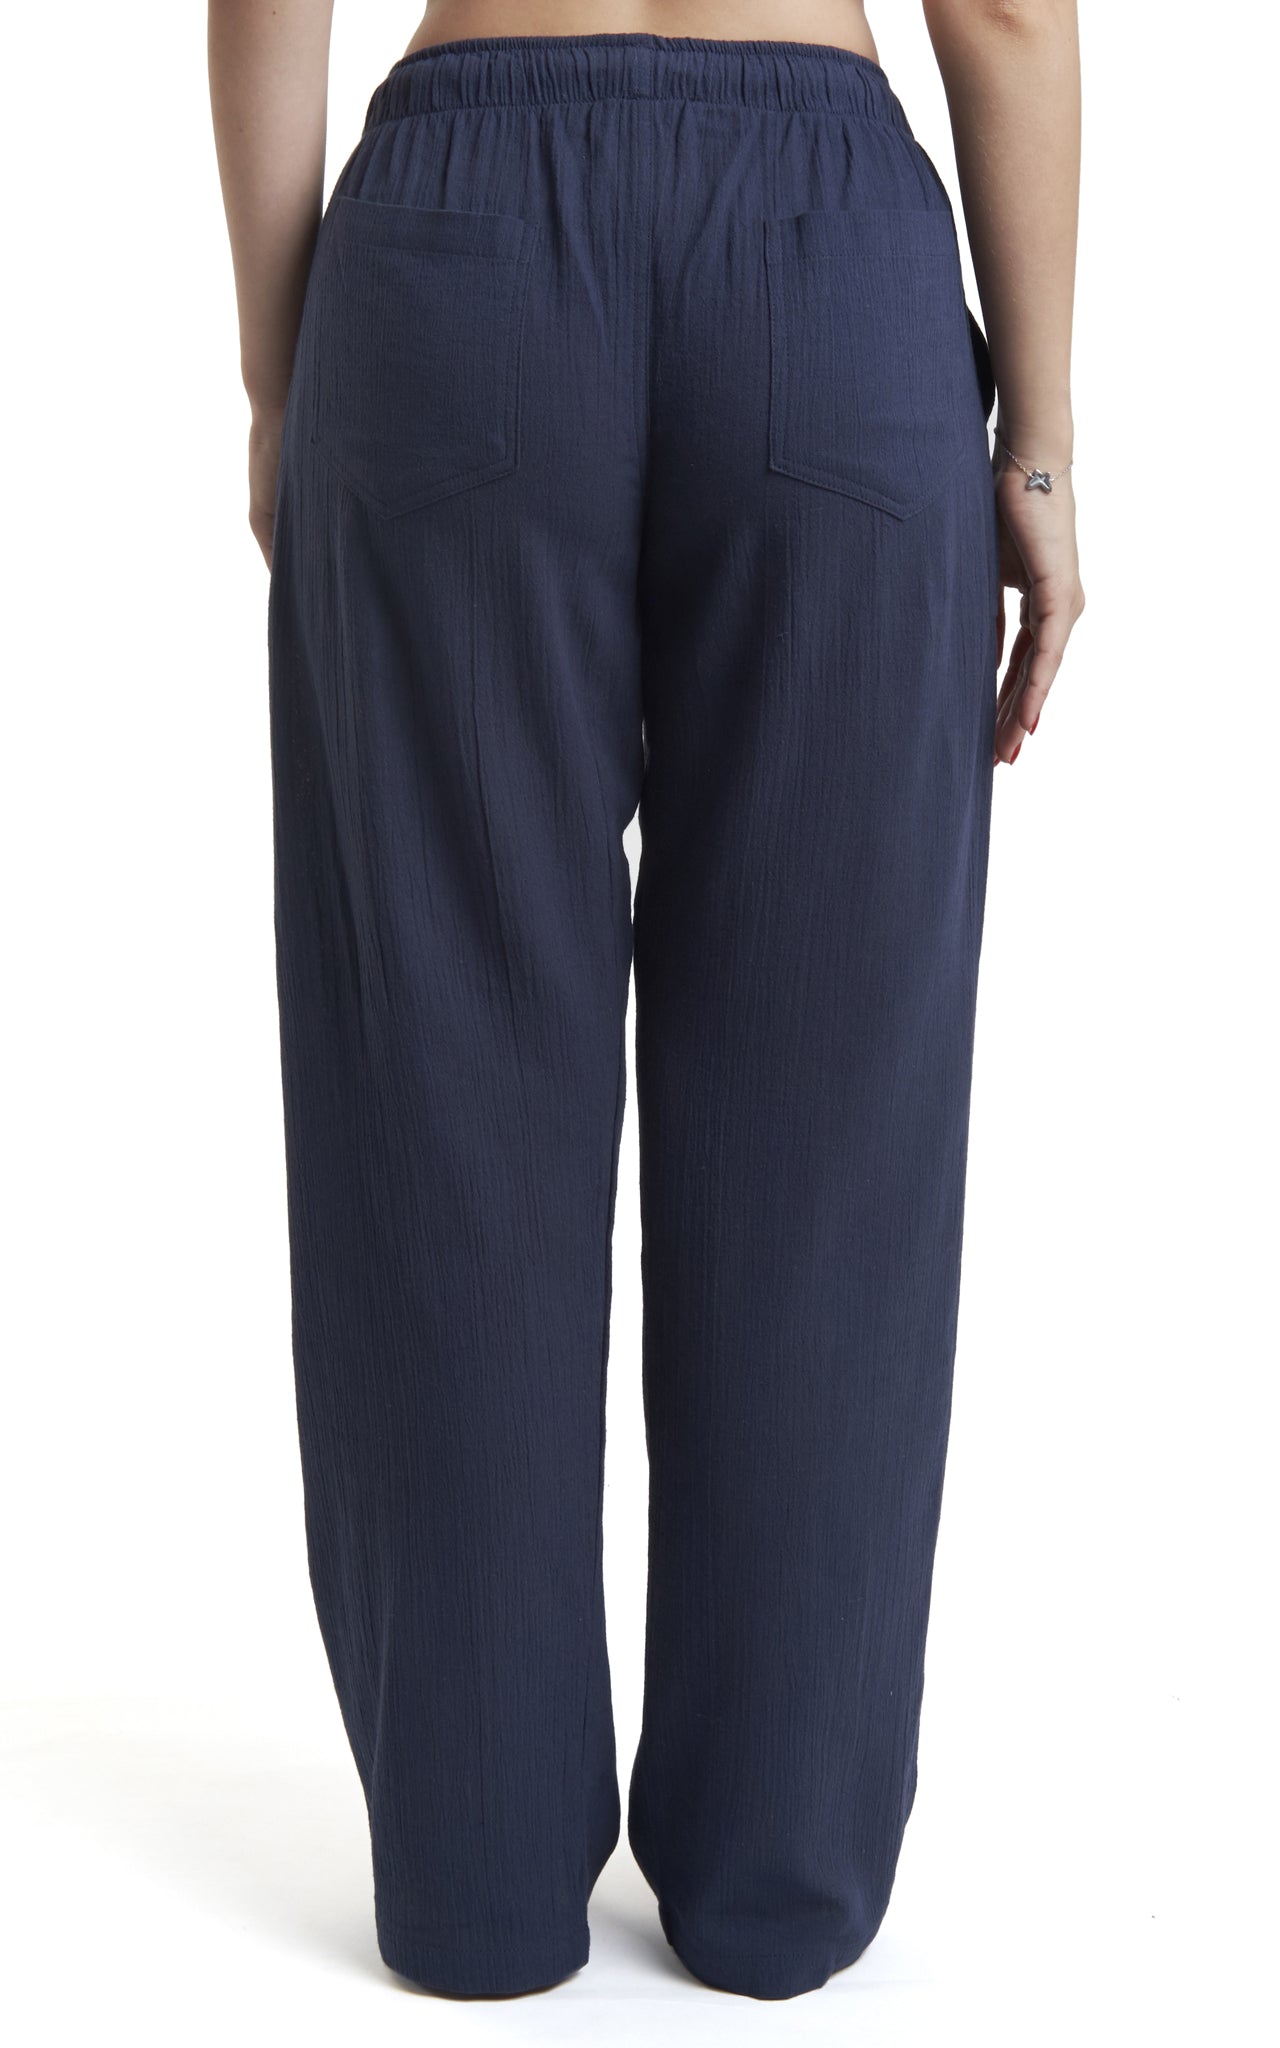 Women's Gauze Cotton PJ & Beach Pants with Pockets (Navy Blue)